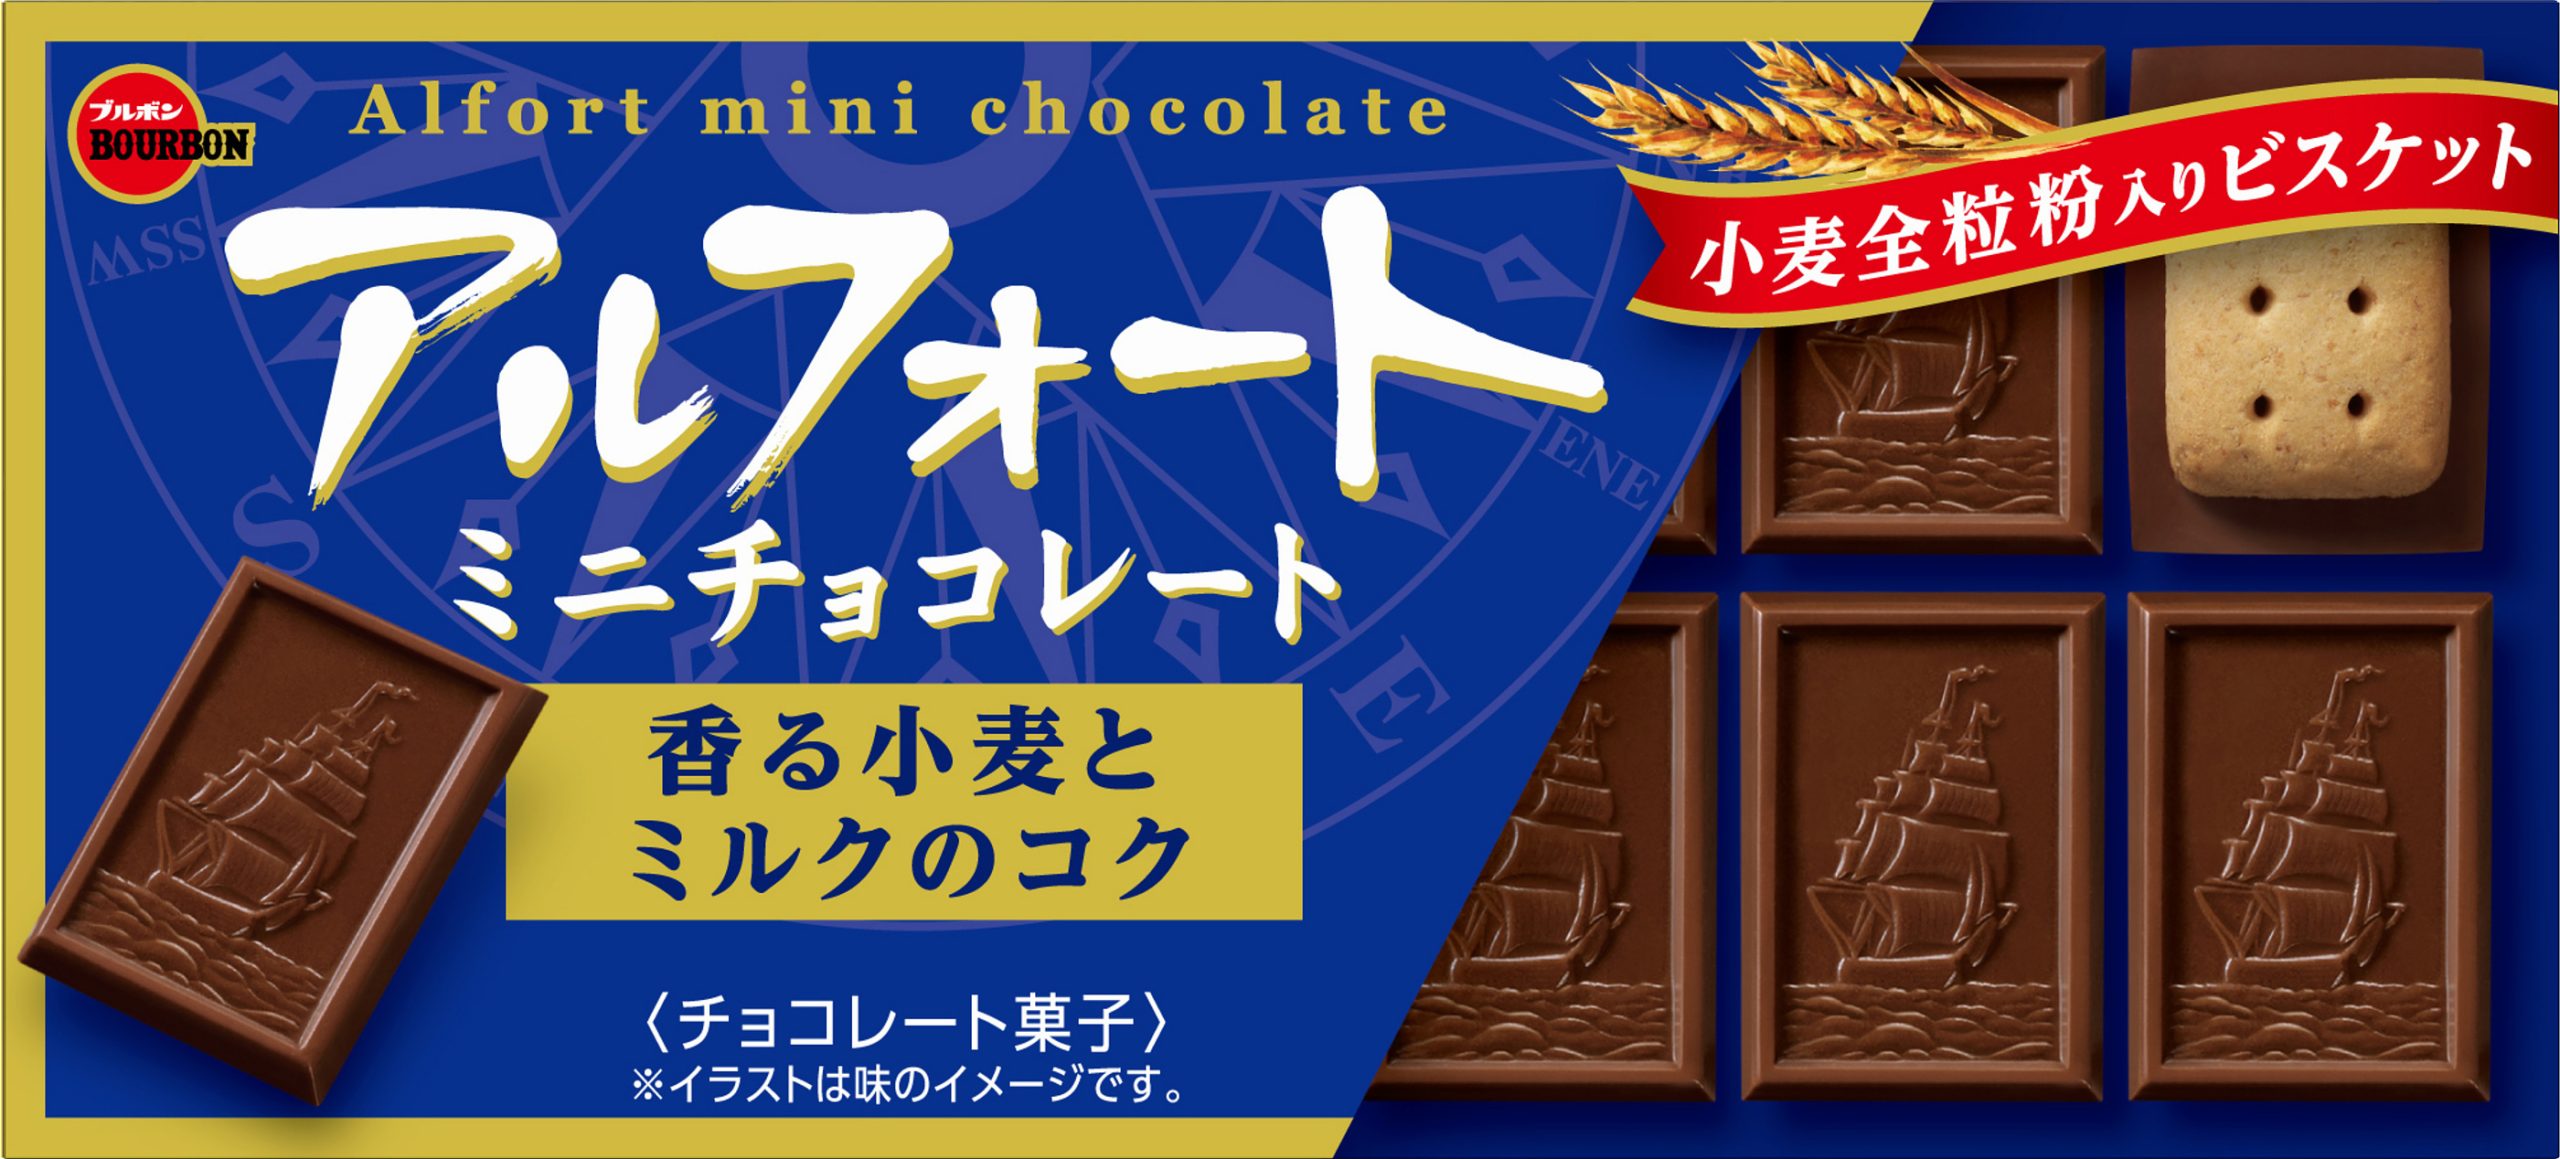 alfort mini chocolate